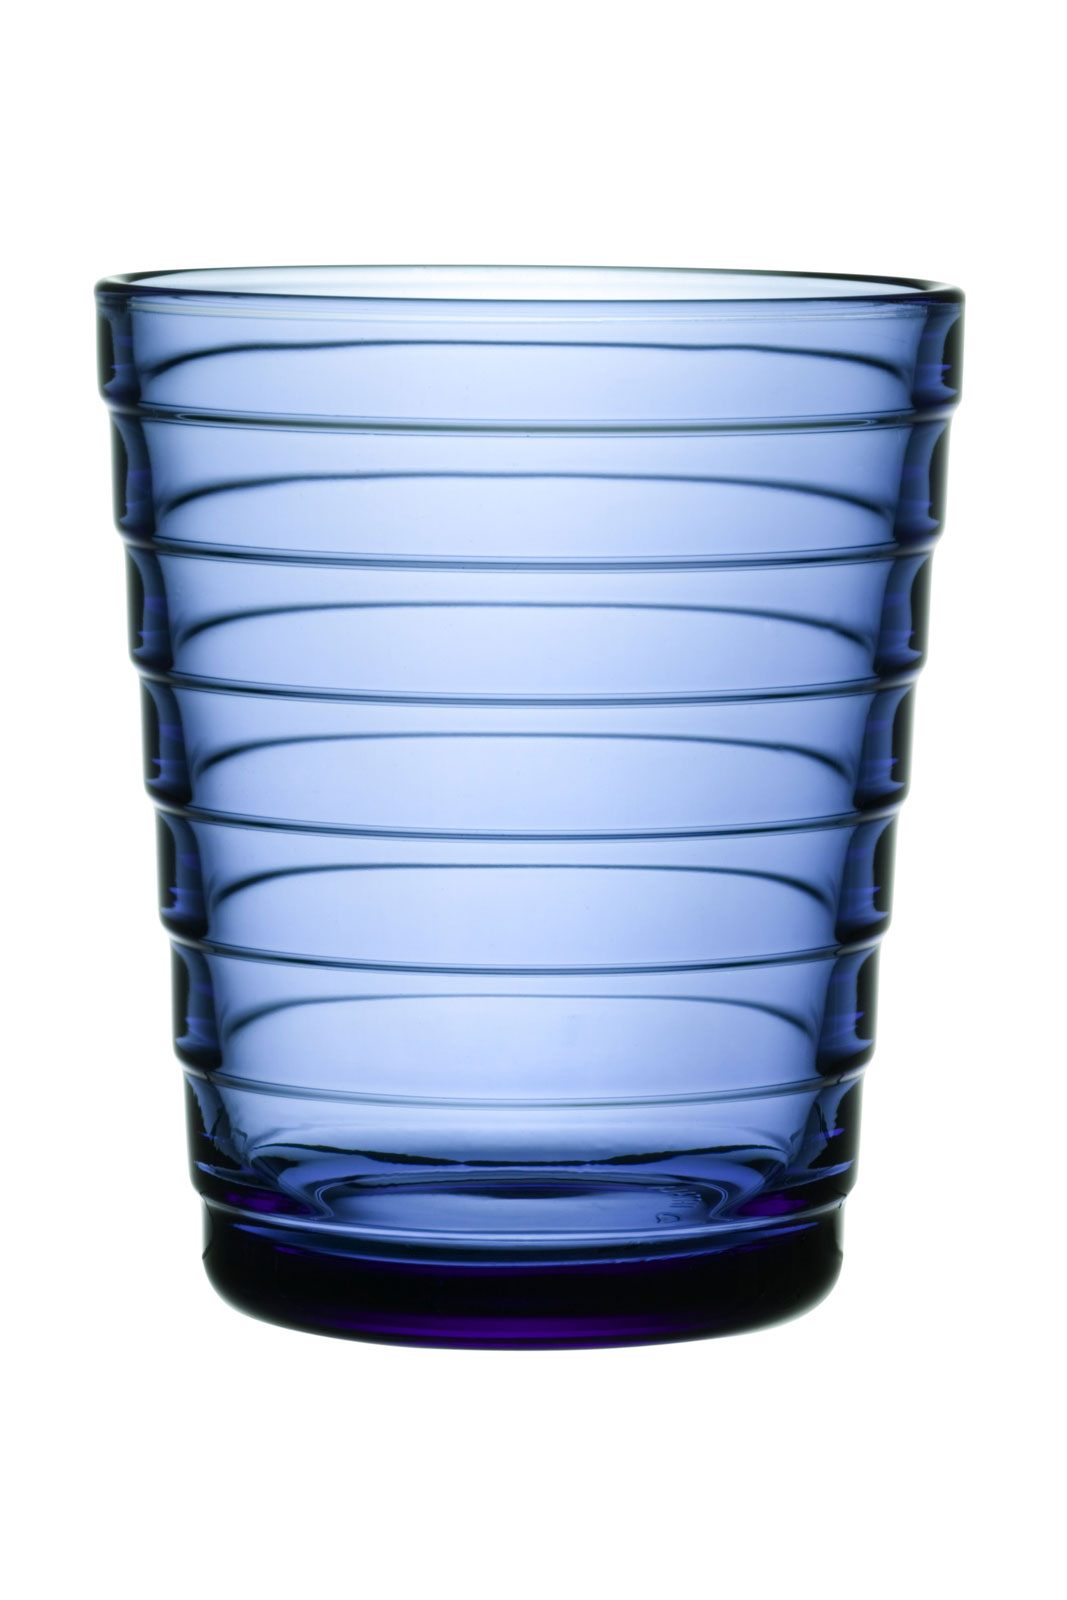 iittala Aino Aalto Glas 0,22ltr. ultramarine blue